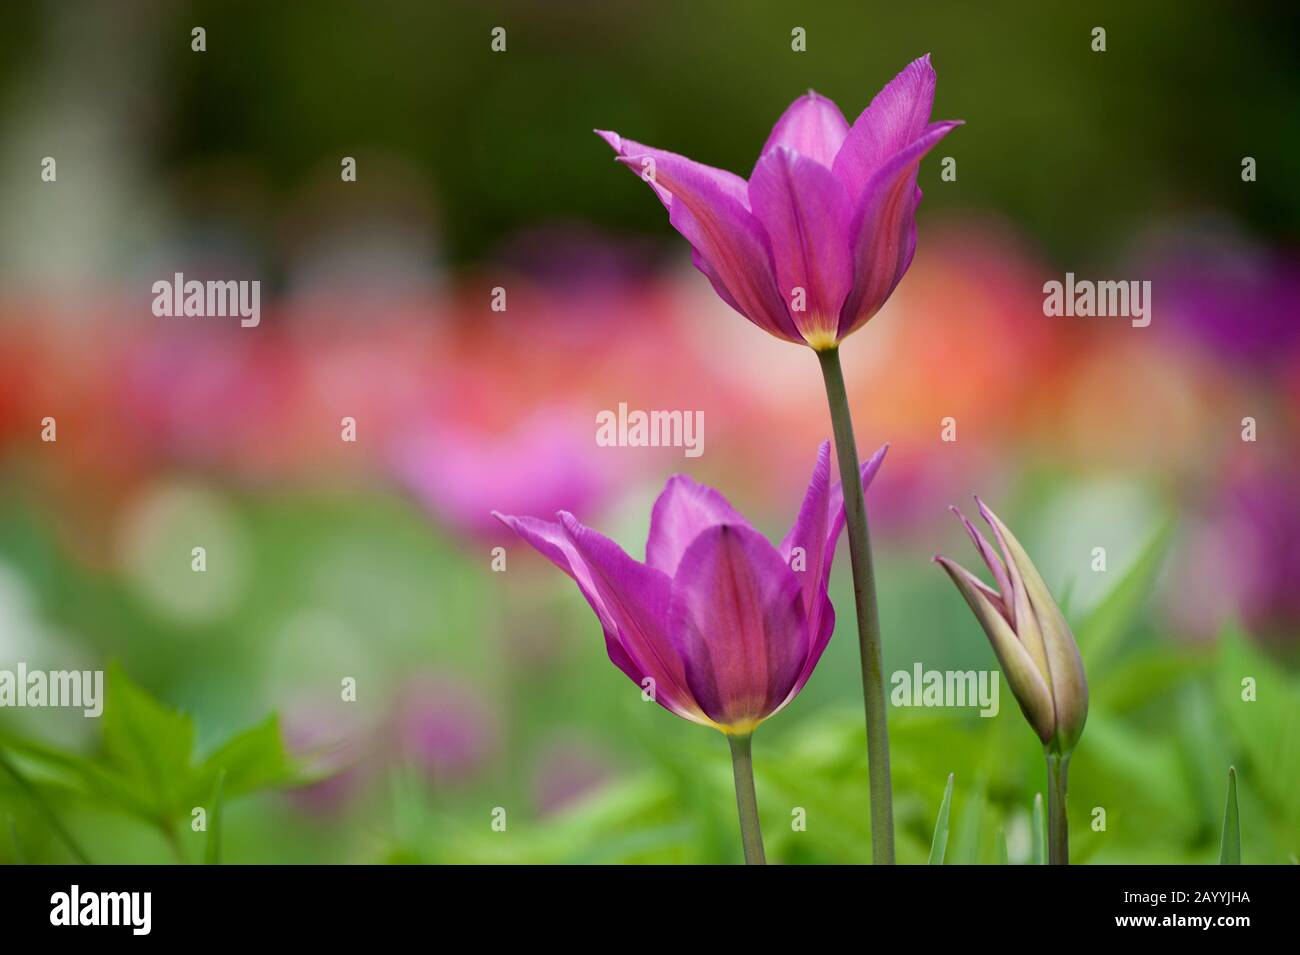 common garden tulip (Tulipa 'Maytime', Tulips Maytime), cultivar Maytime Stock Photo